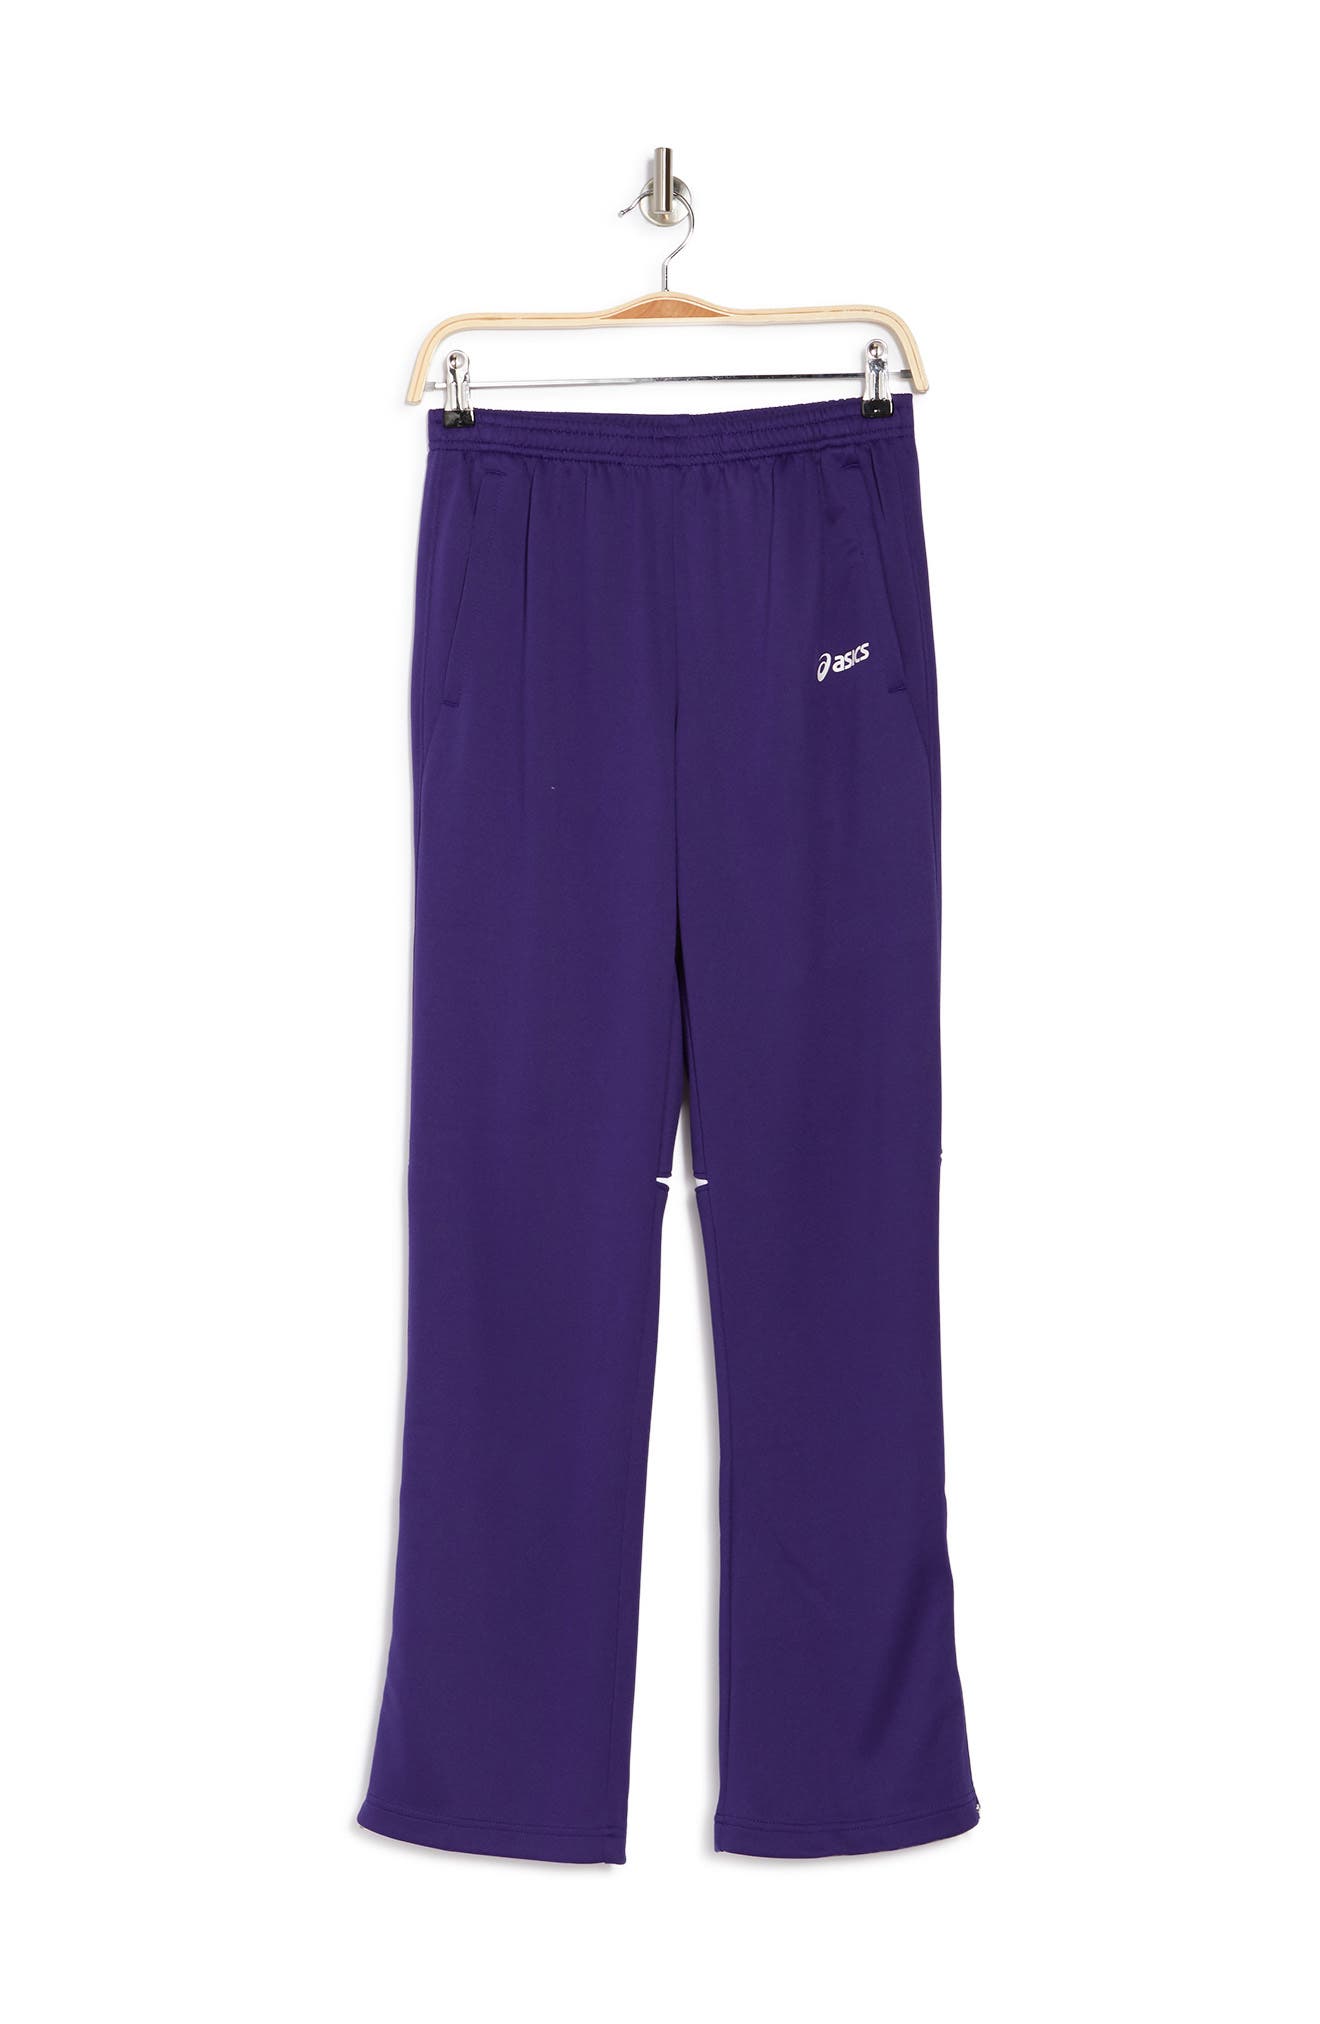 Asics Cali Performance Pants In Purple/white